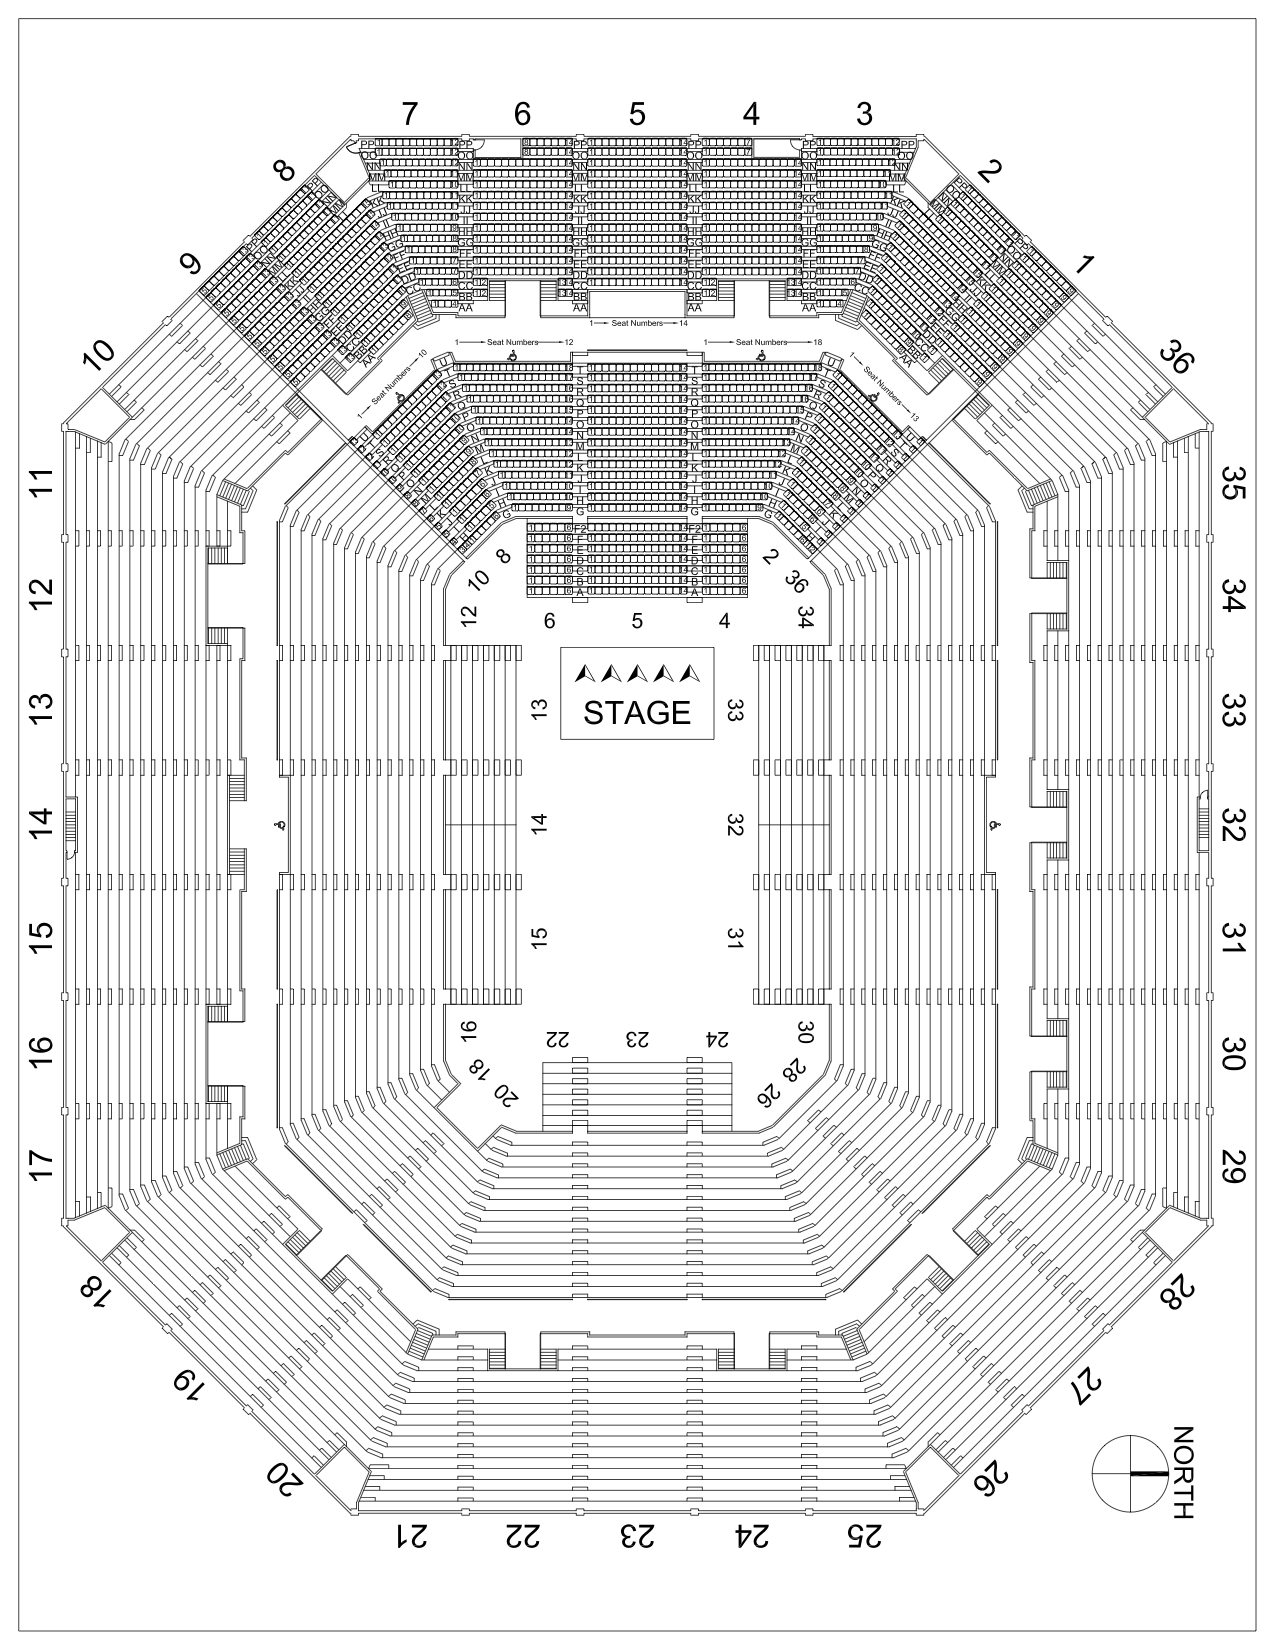 Beasley Coliseum Seating Chart Basketball